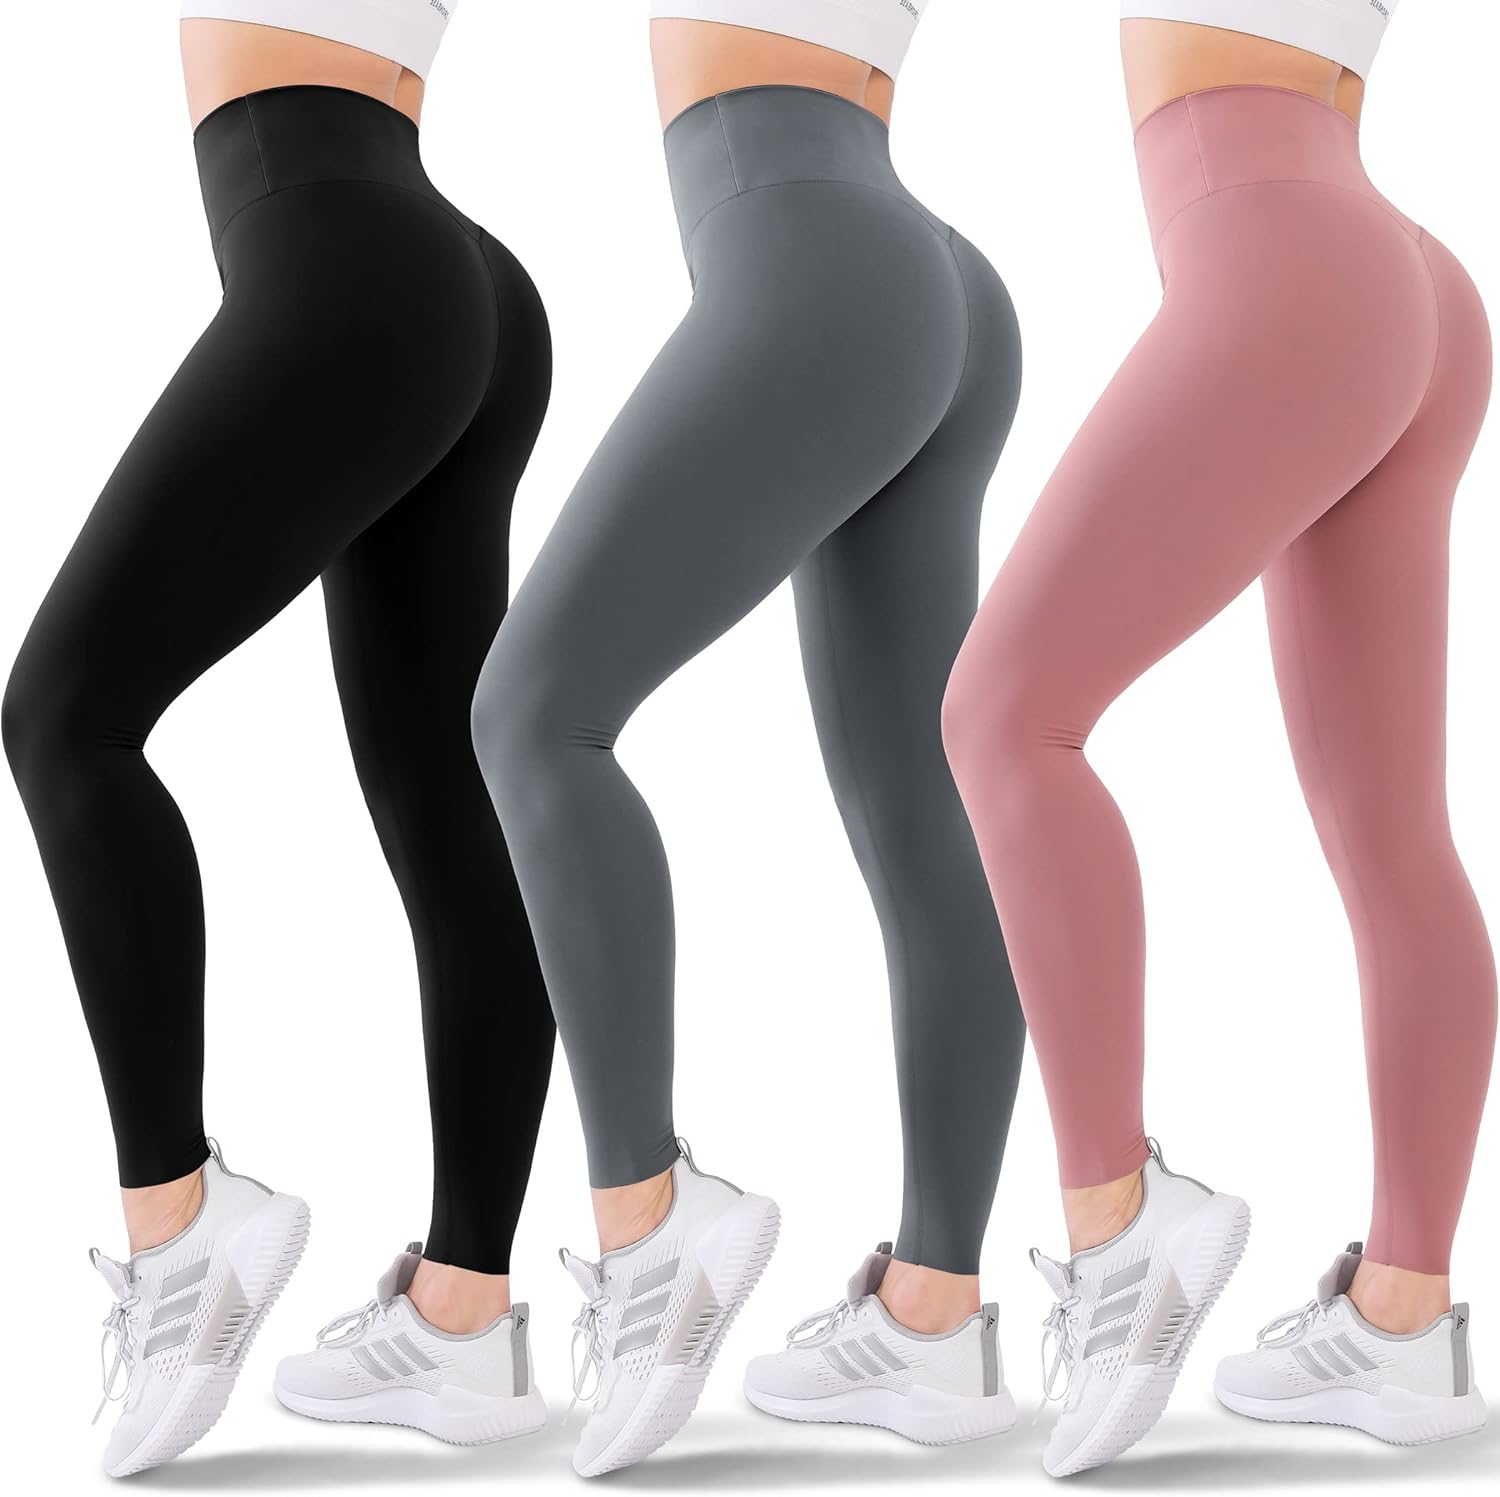 Blisset 3 Pack Leggings for Women Butt Lift High Waisted Tummy Control No See-Through Yoga Pants Workout Running Leggings